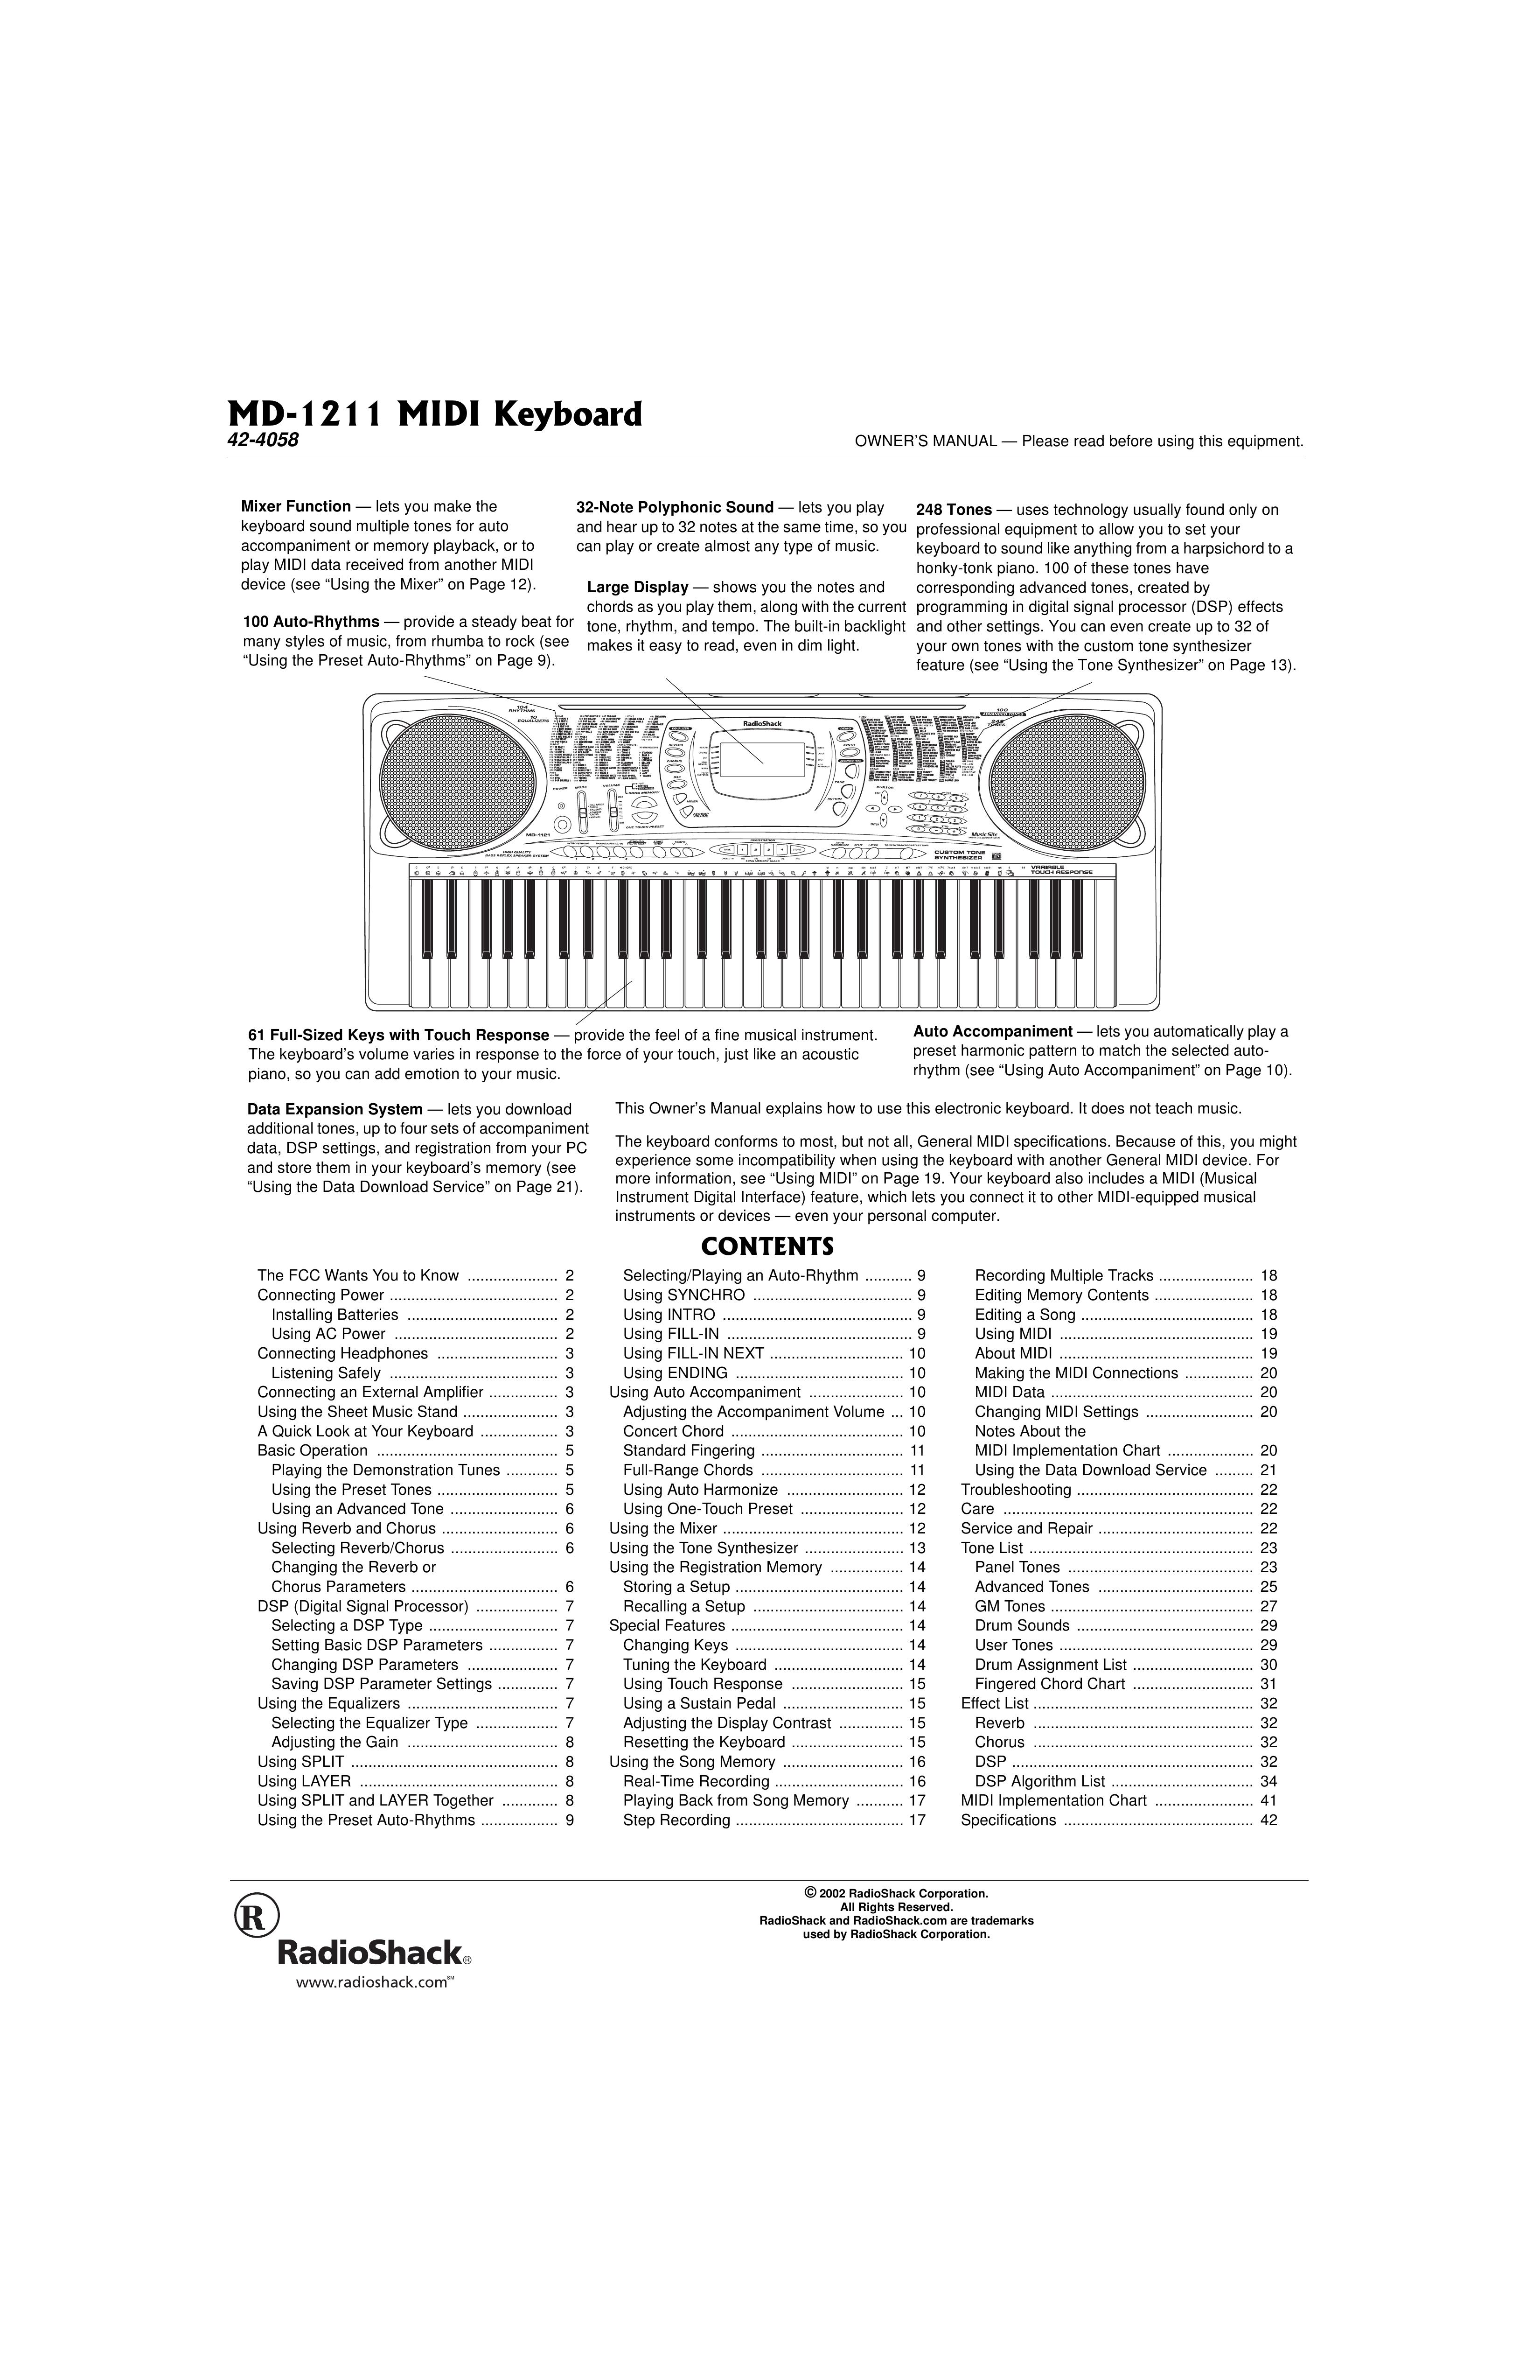 Radio Shack 42-4058 Electronic Keyboard User Manual